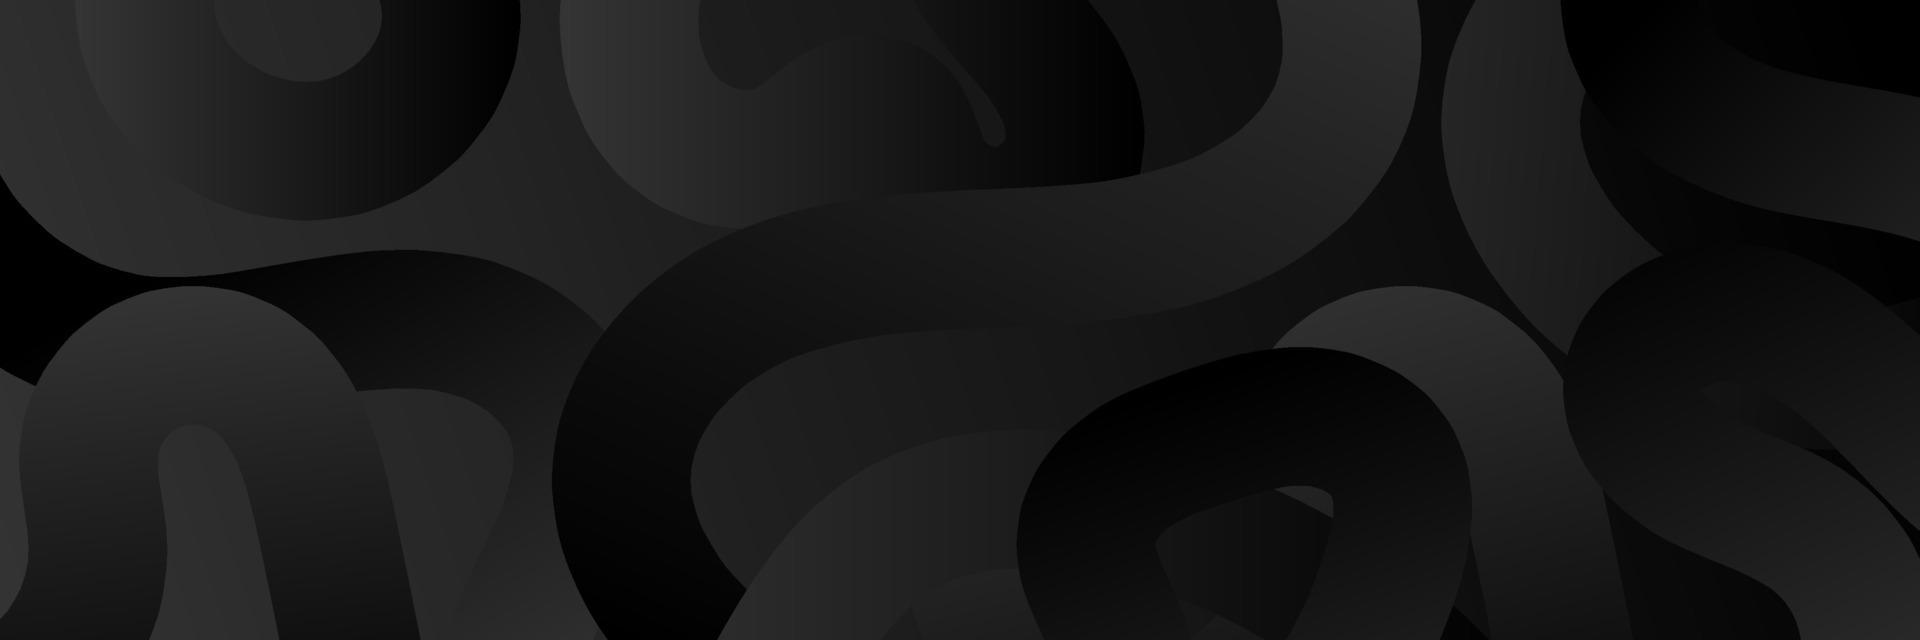 fundo abstrato vector preto com listras. fundo gradiente preto abstrato. textura preta brilhante. ilustração vetorial